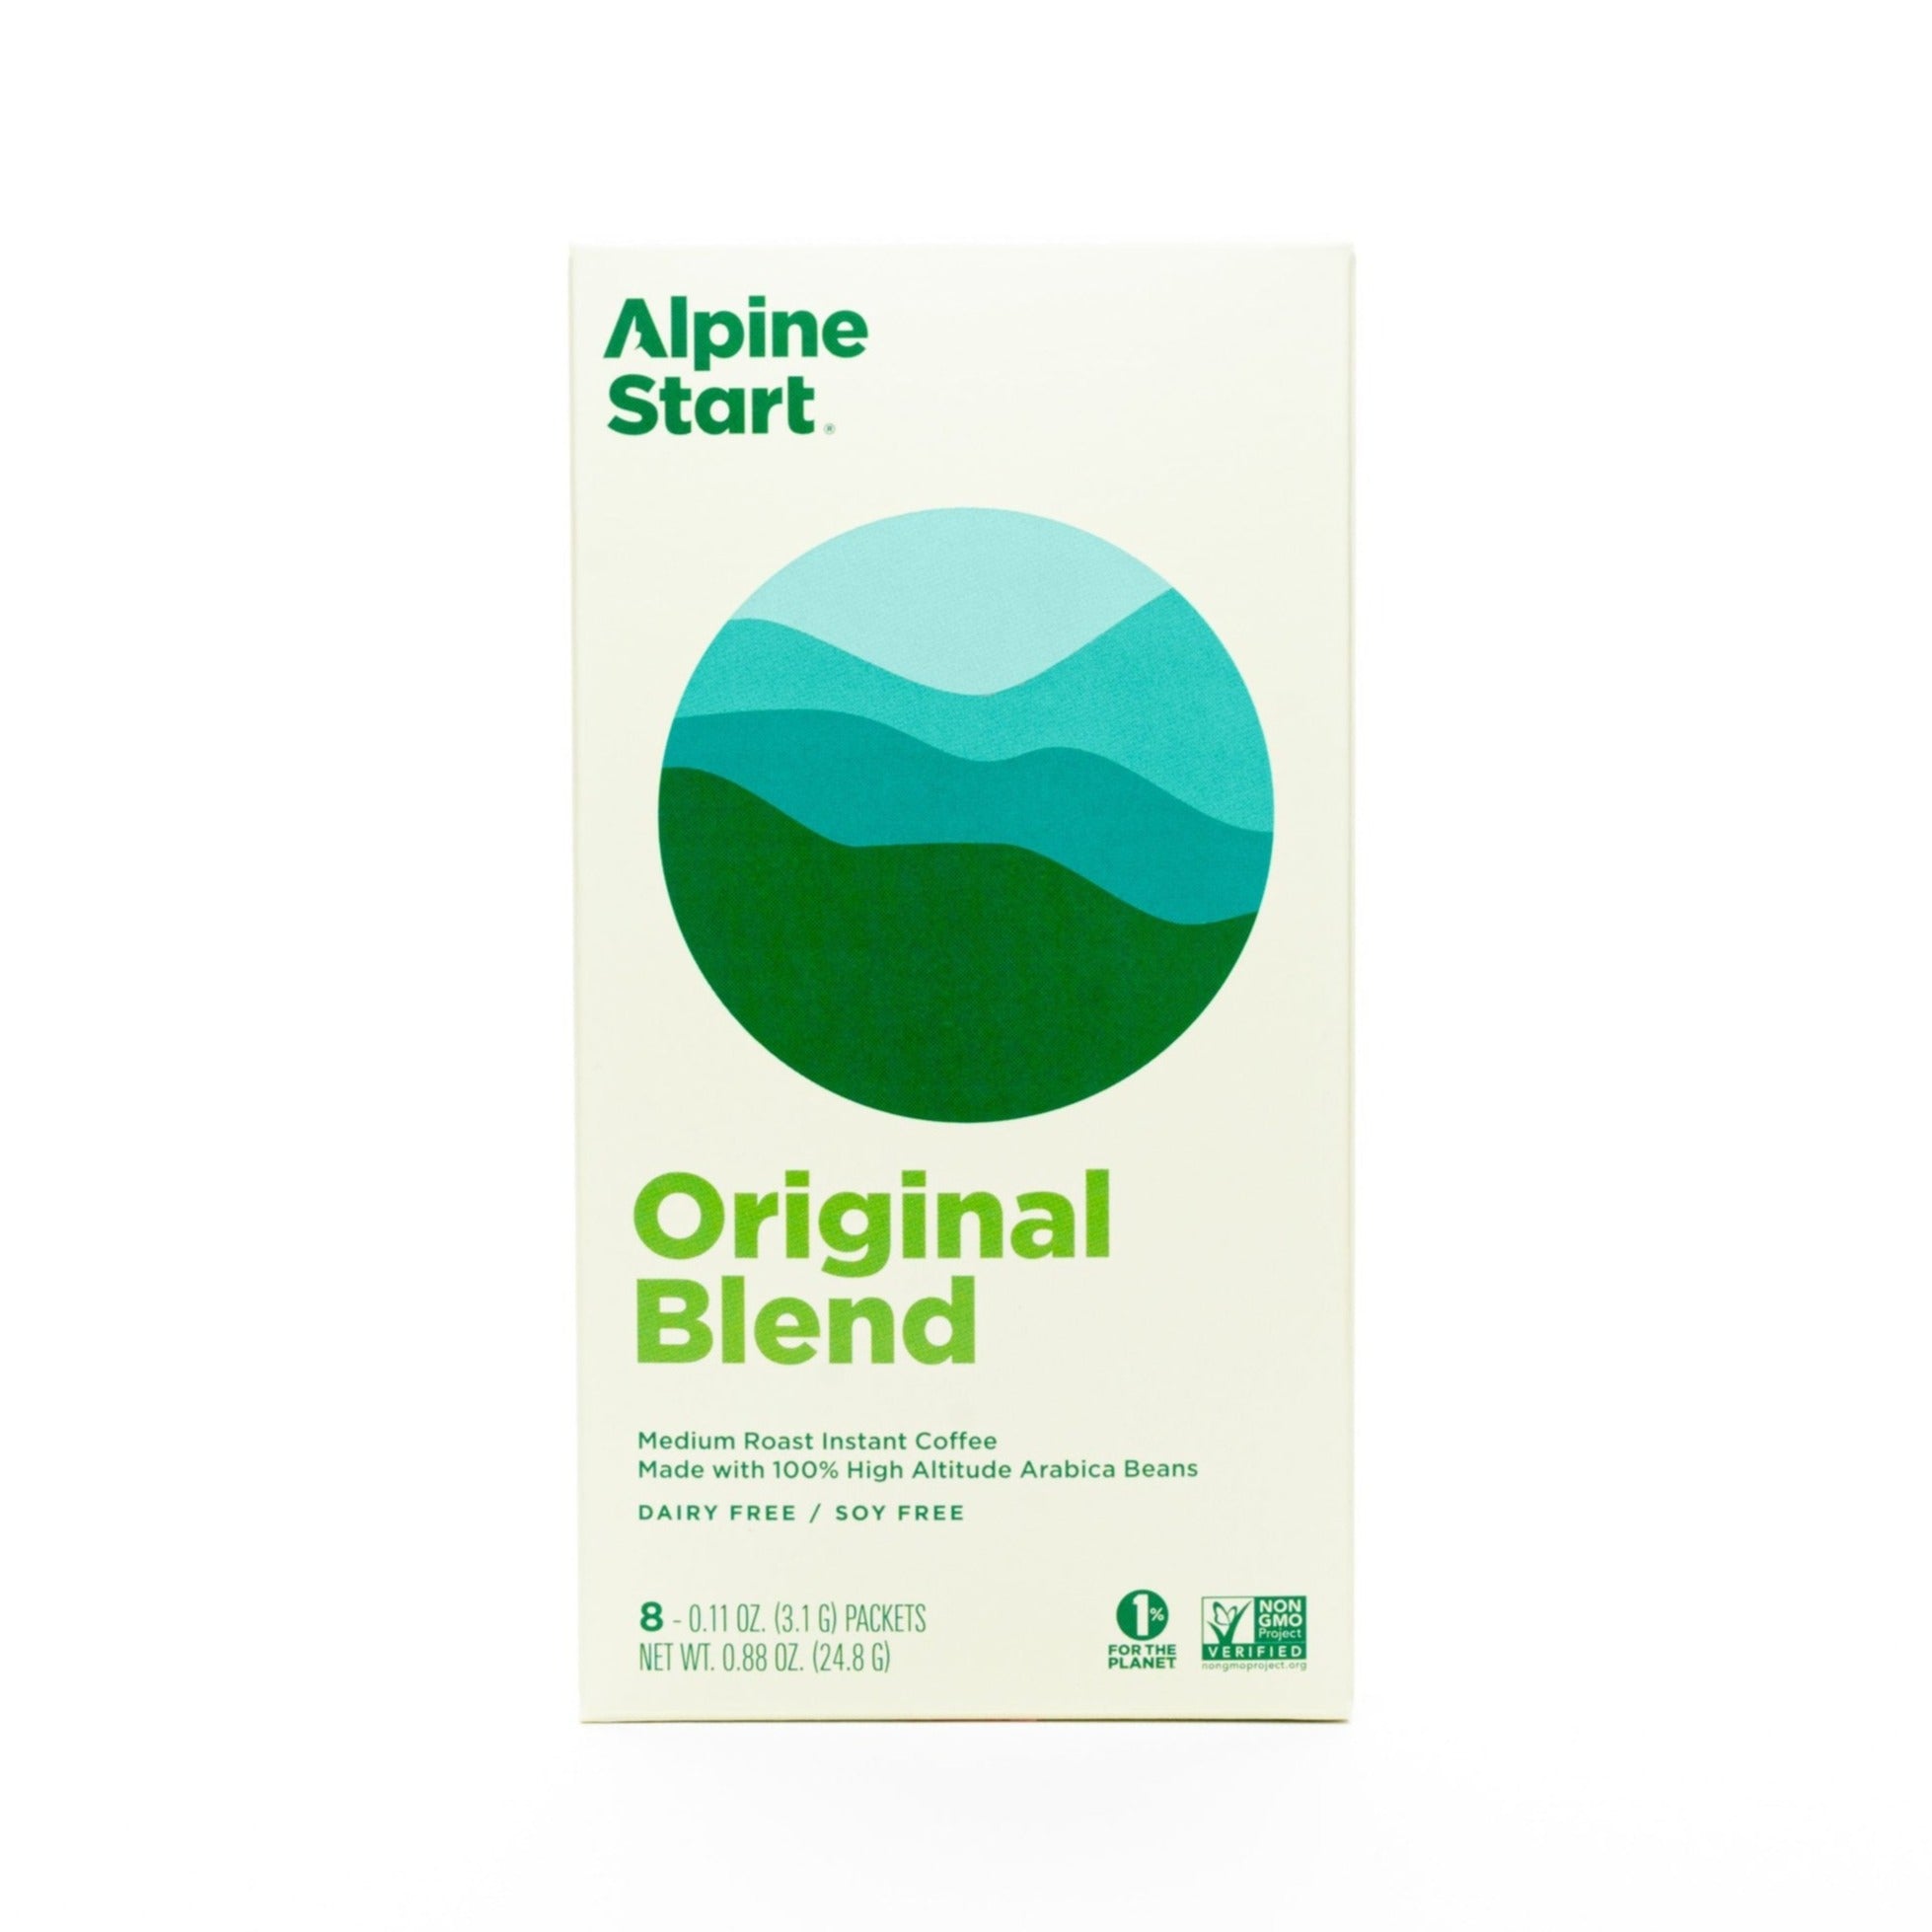 Original Blend Medium Roast Instant Coffee - Alpine Start